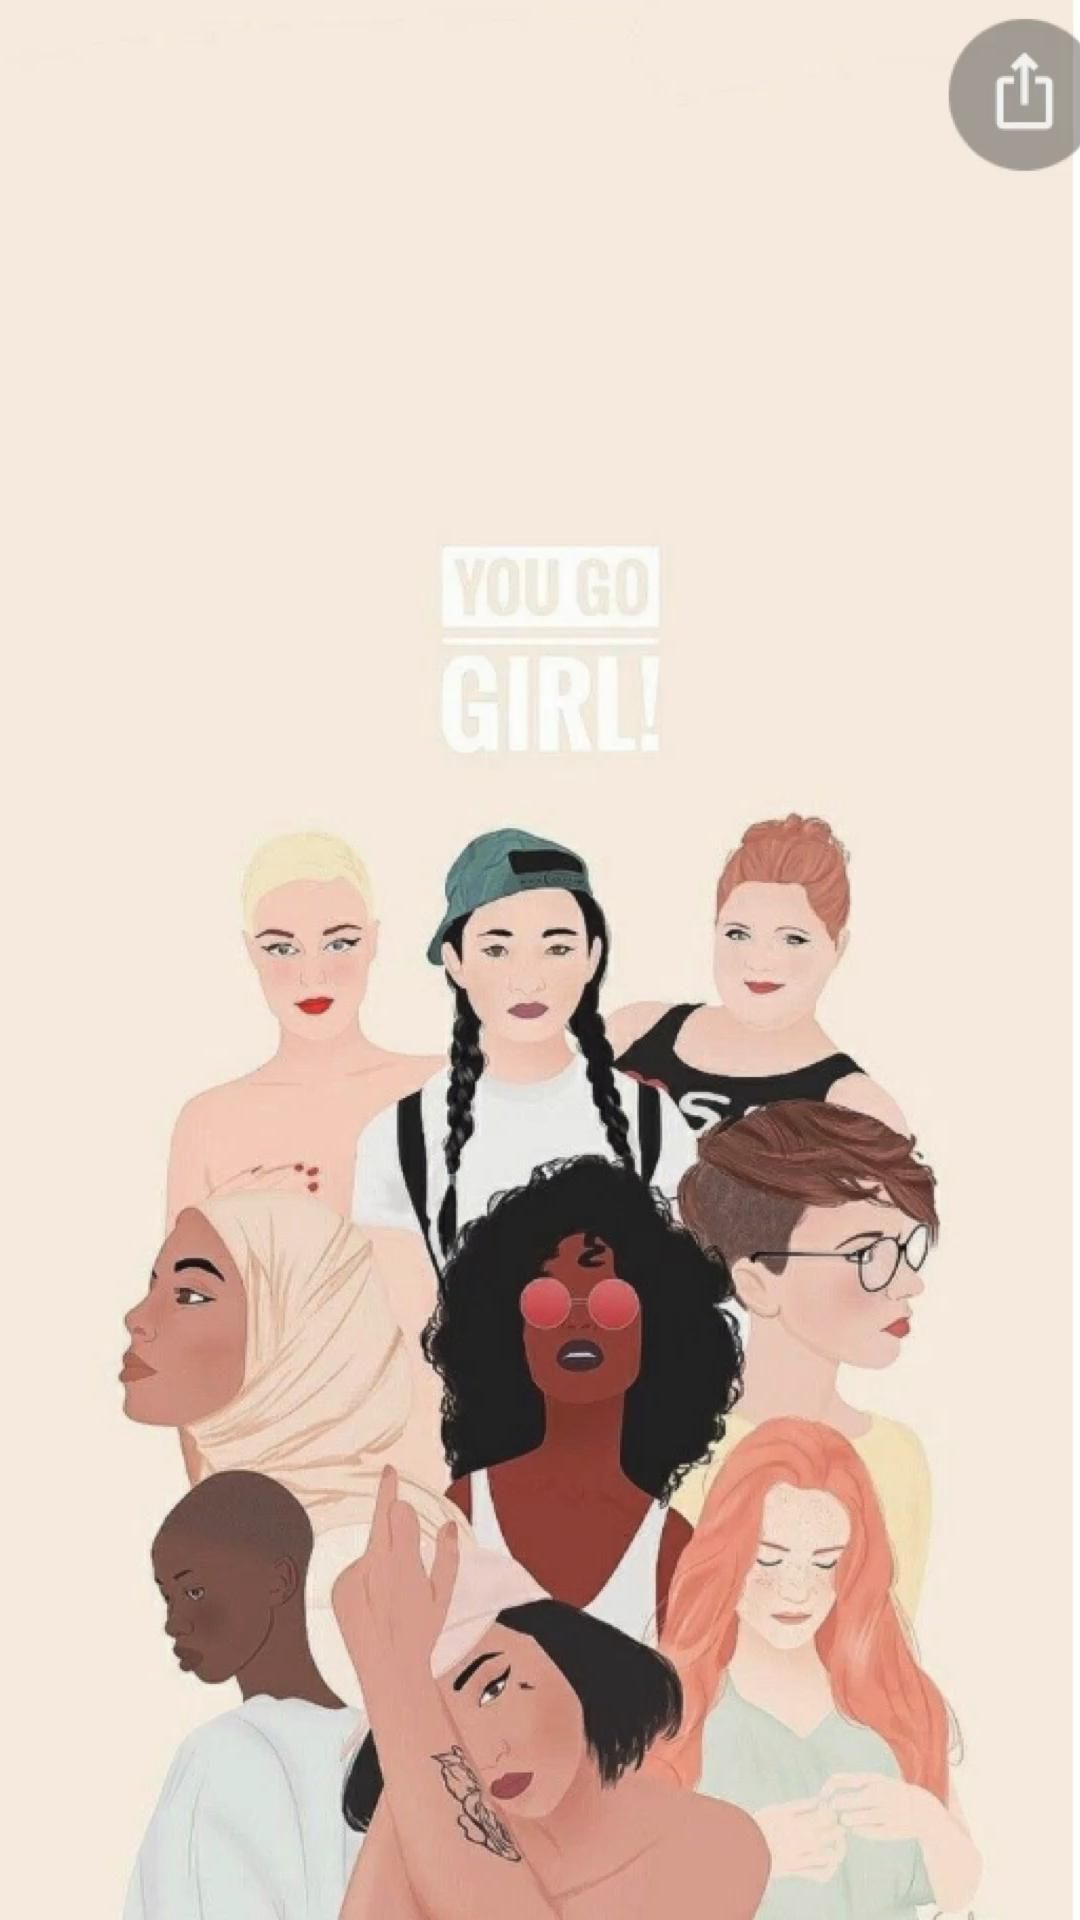 Women Empowerment Wallpapers